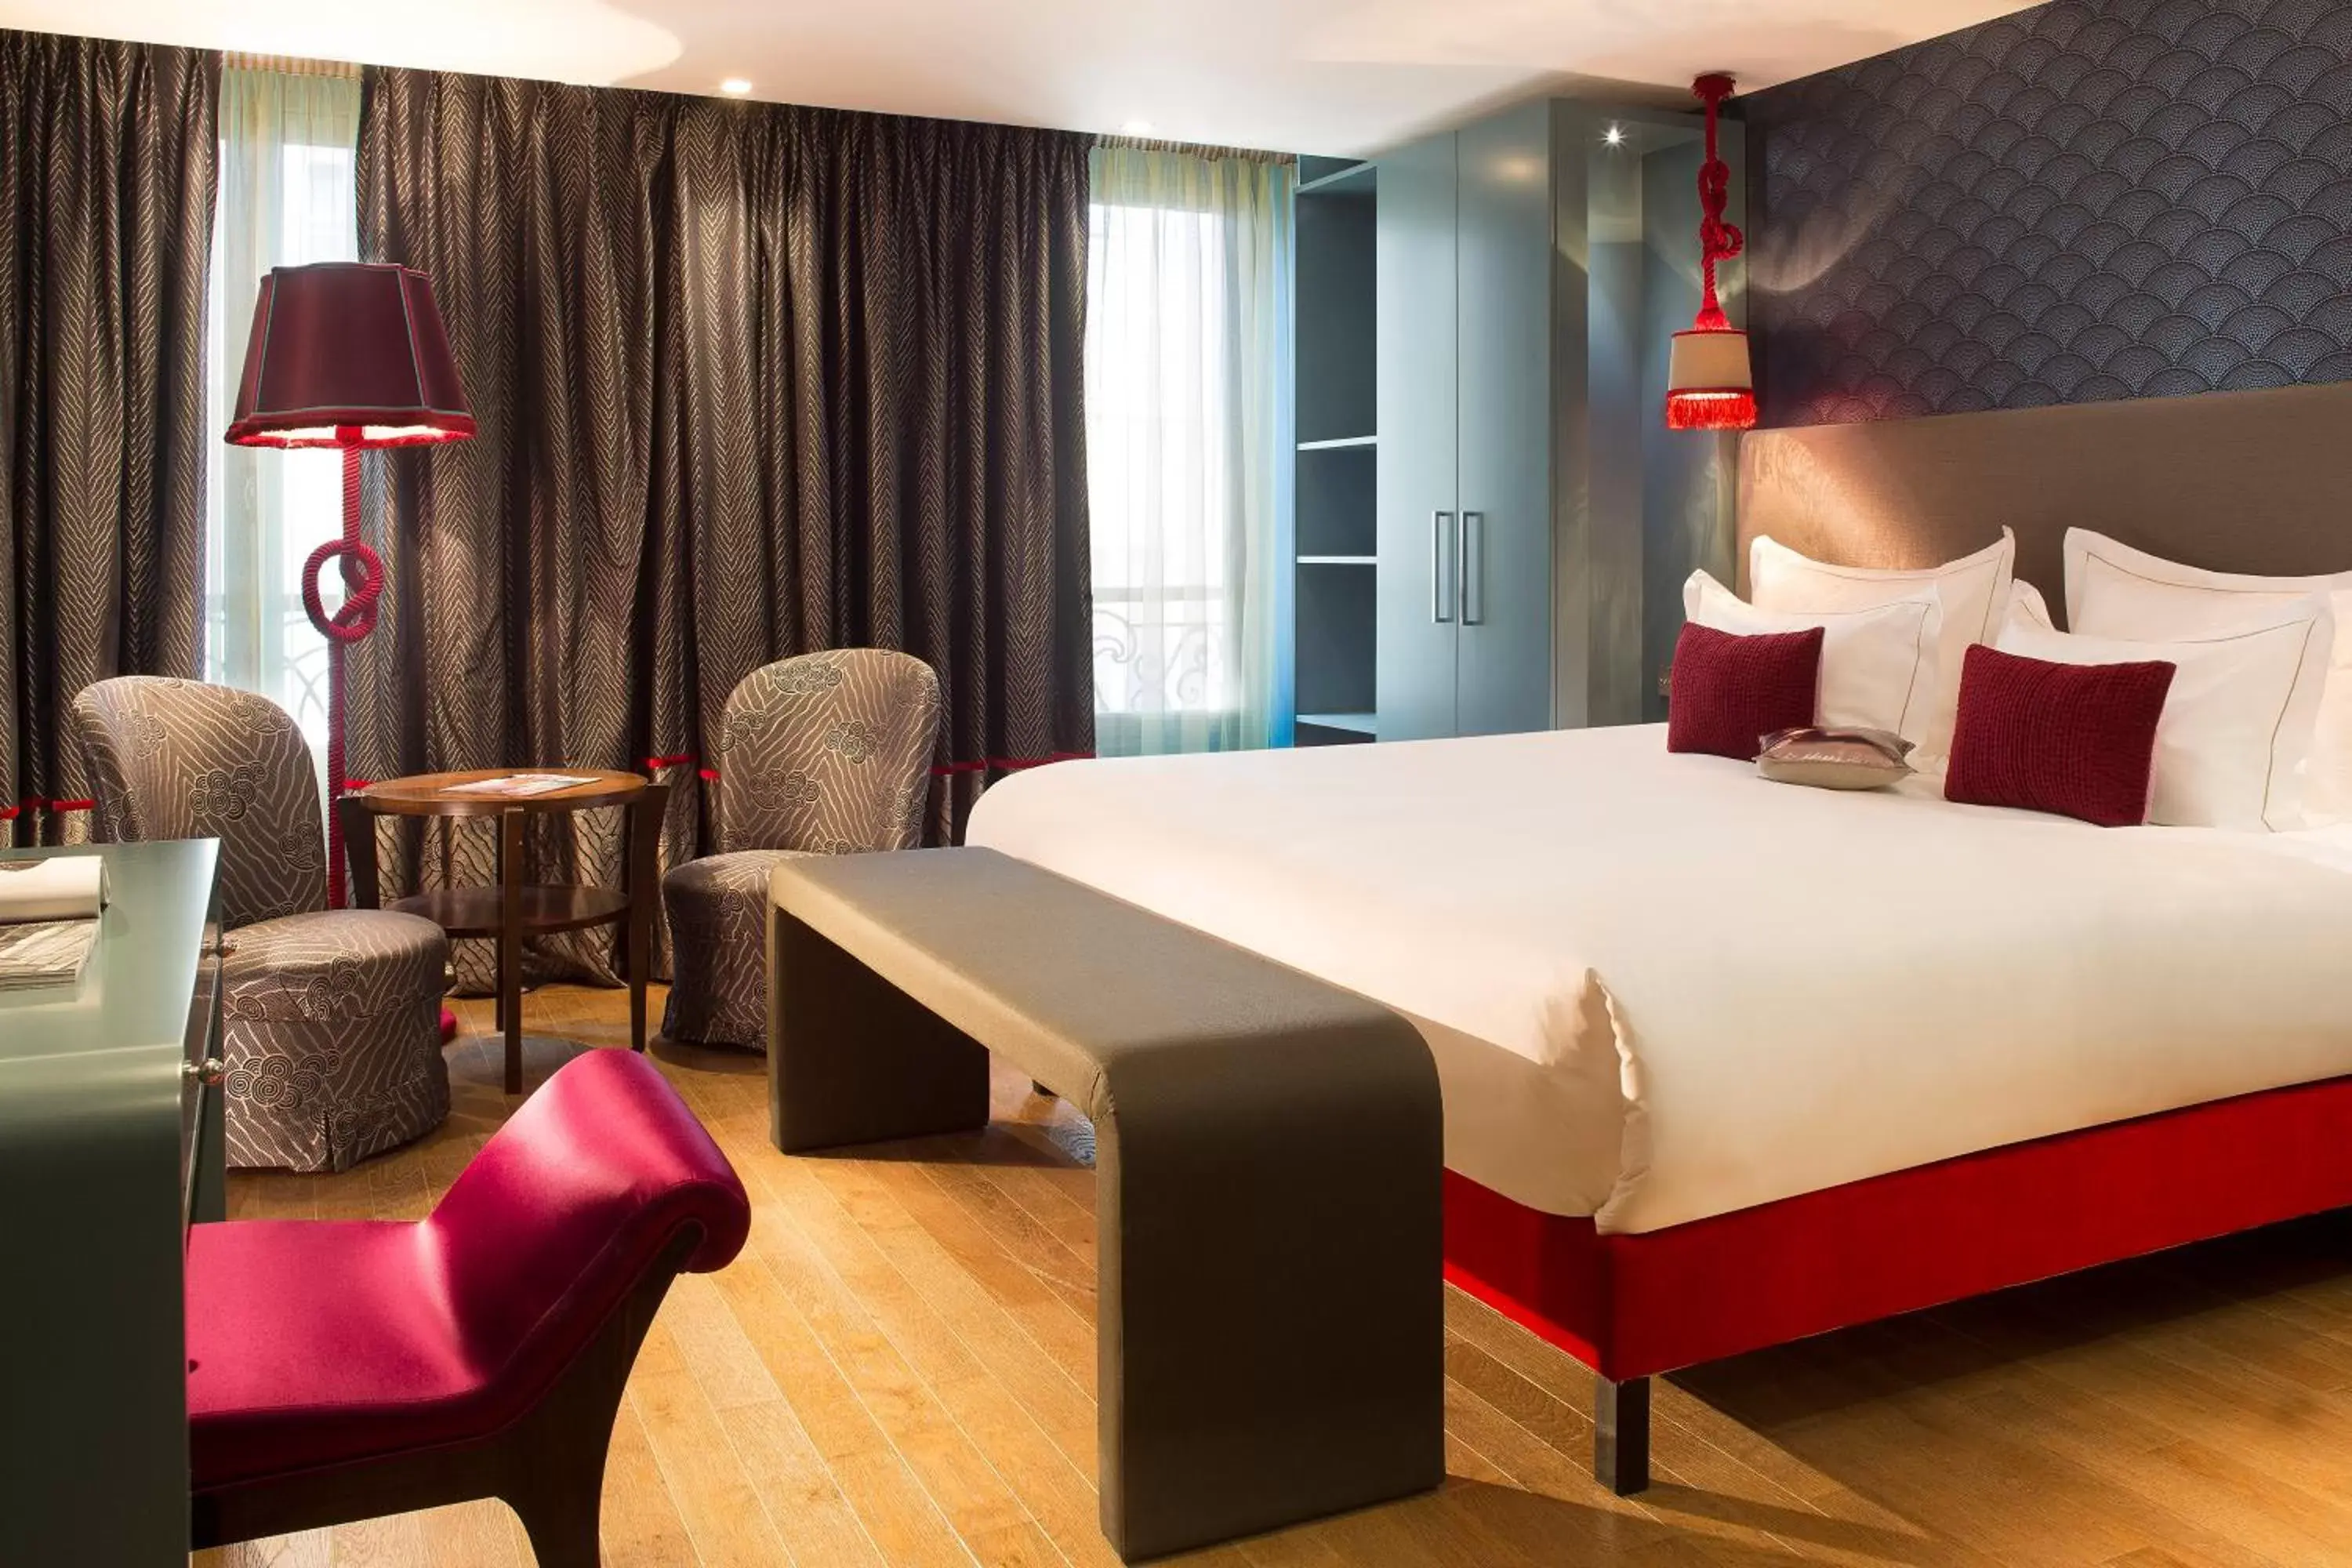 Bed, Room Photo in Monsieur Cadet Hotel & Spa